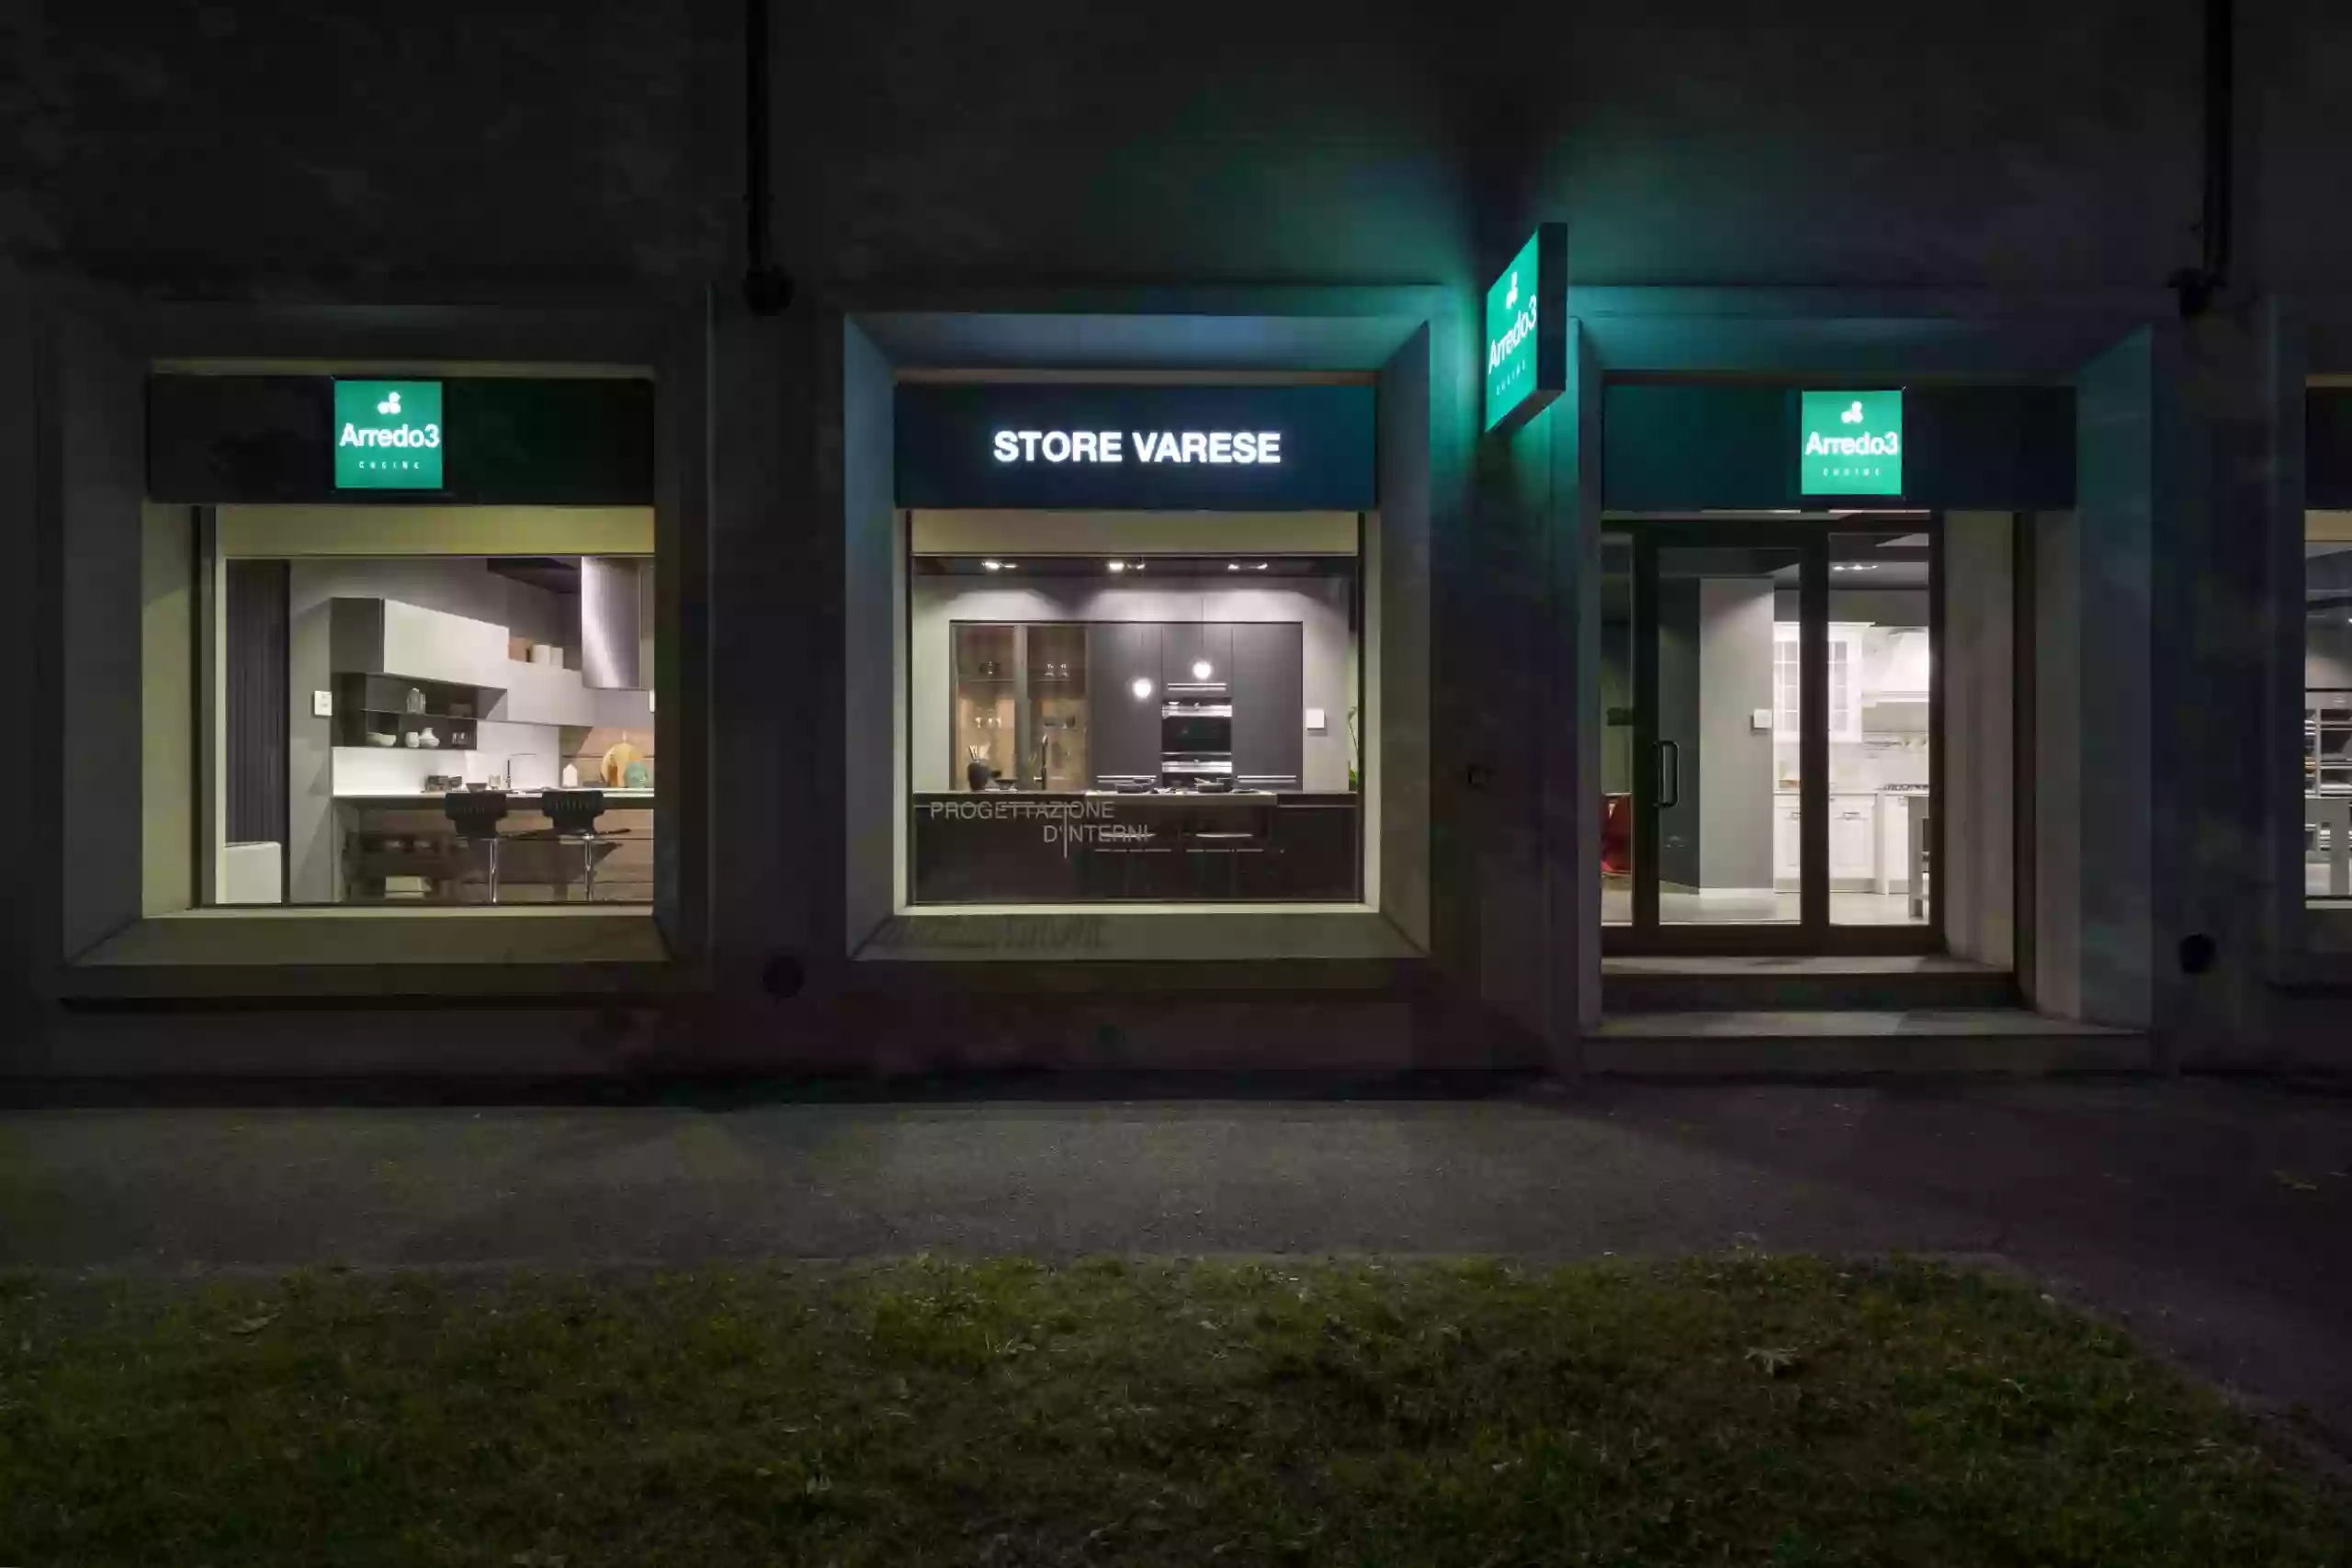 Arredo3 Cucine Store Varese